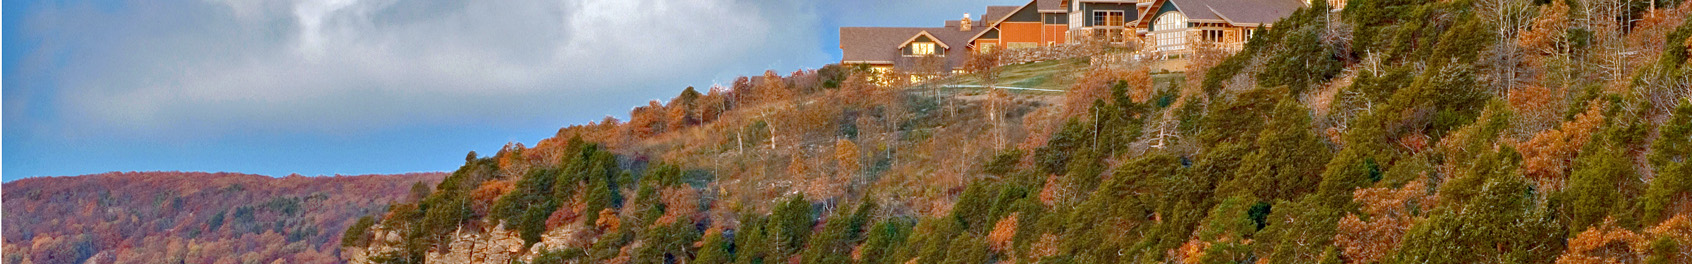 Mount Magazine Lodge Vista